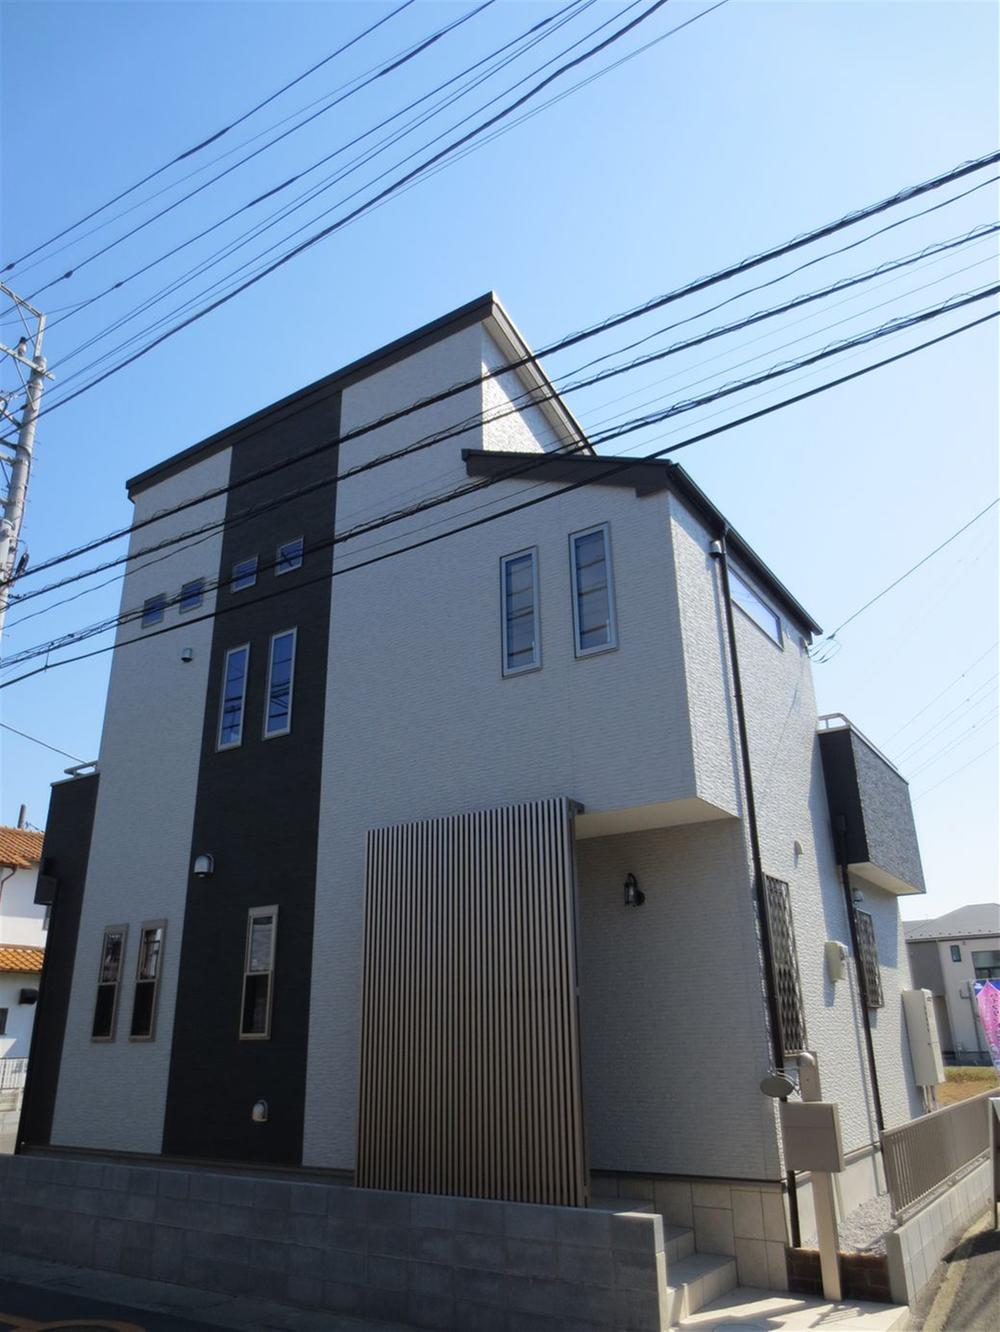 Building plan example (exterior photos). Building plan example Building price 15.8 million yen, Building area 28 square meters